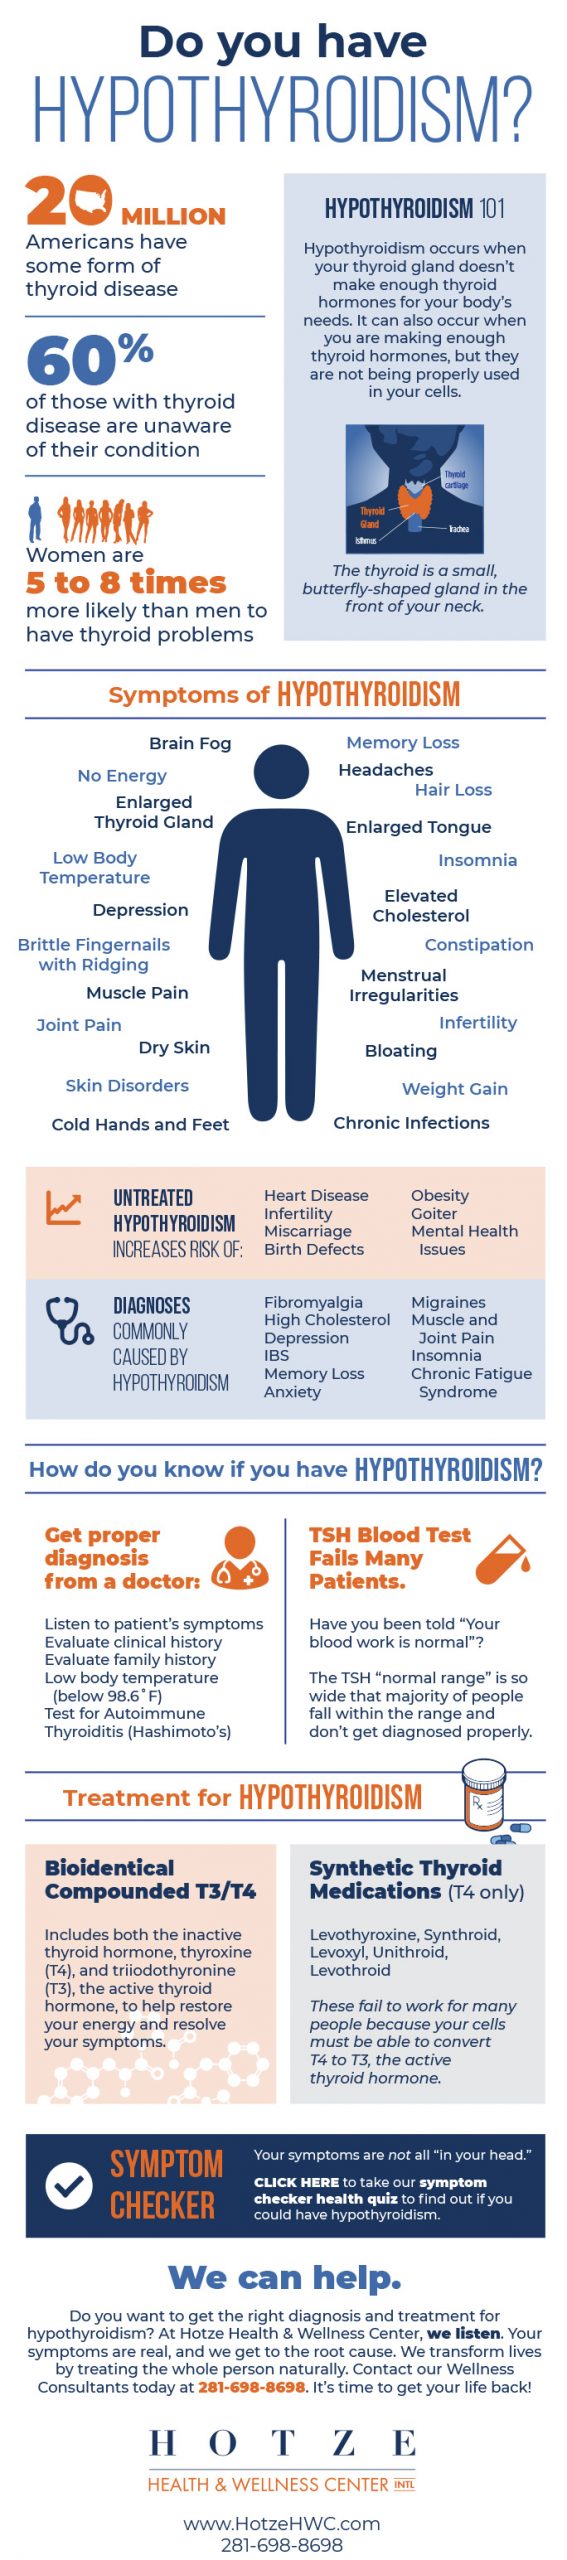 infographic on hypothyroidism